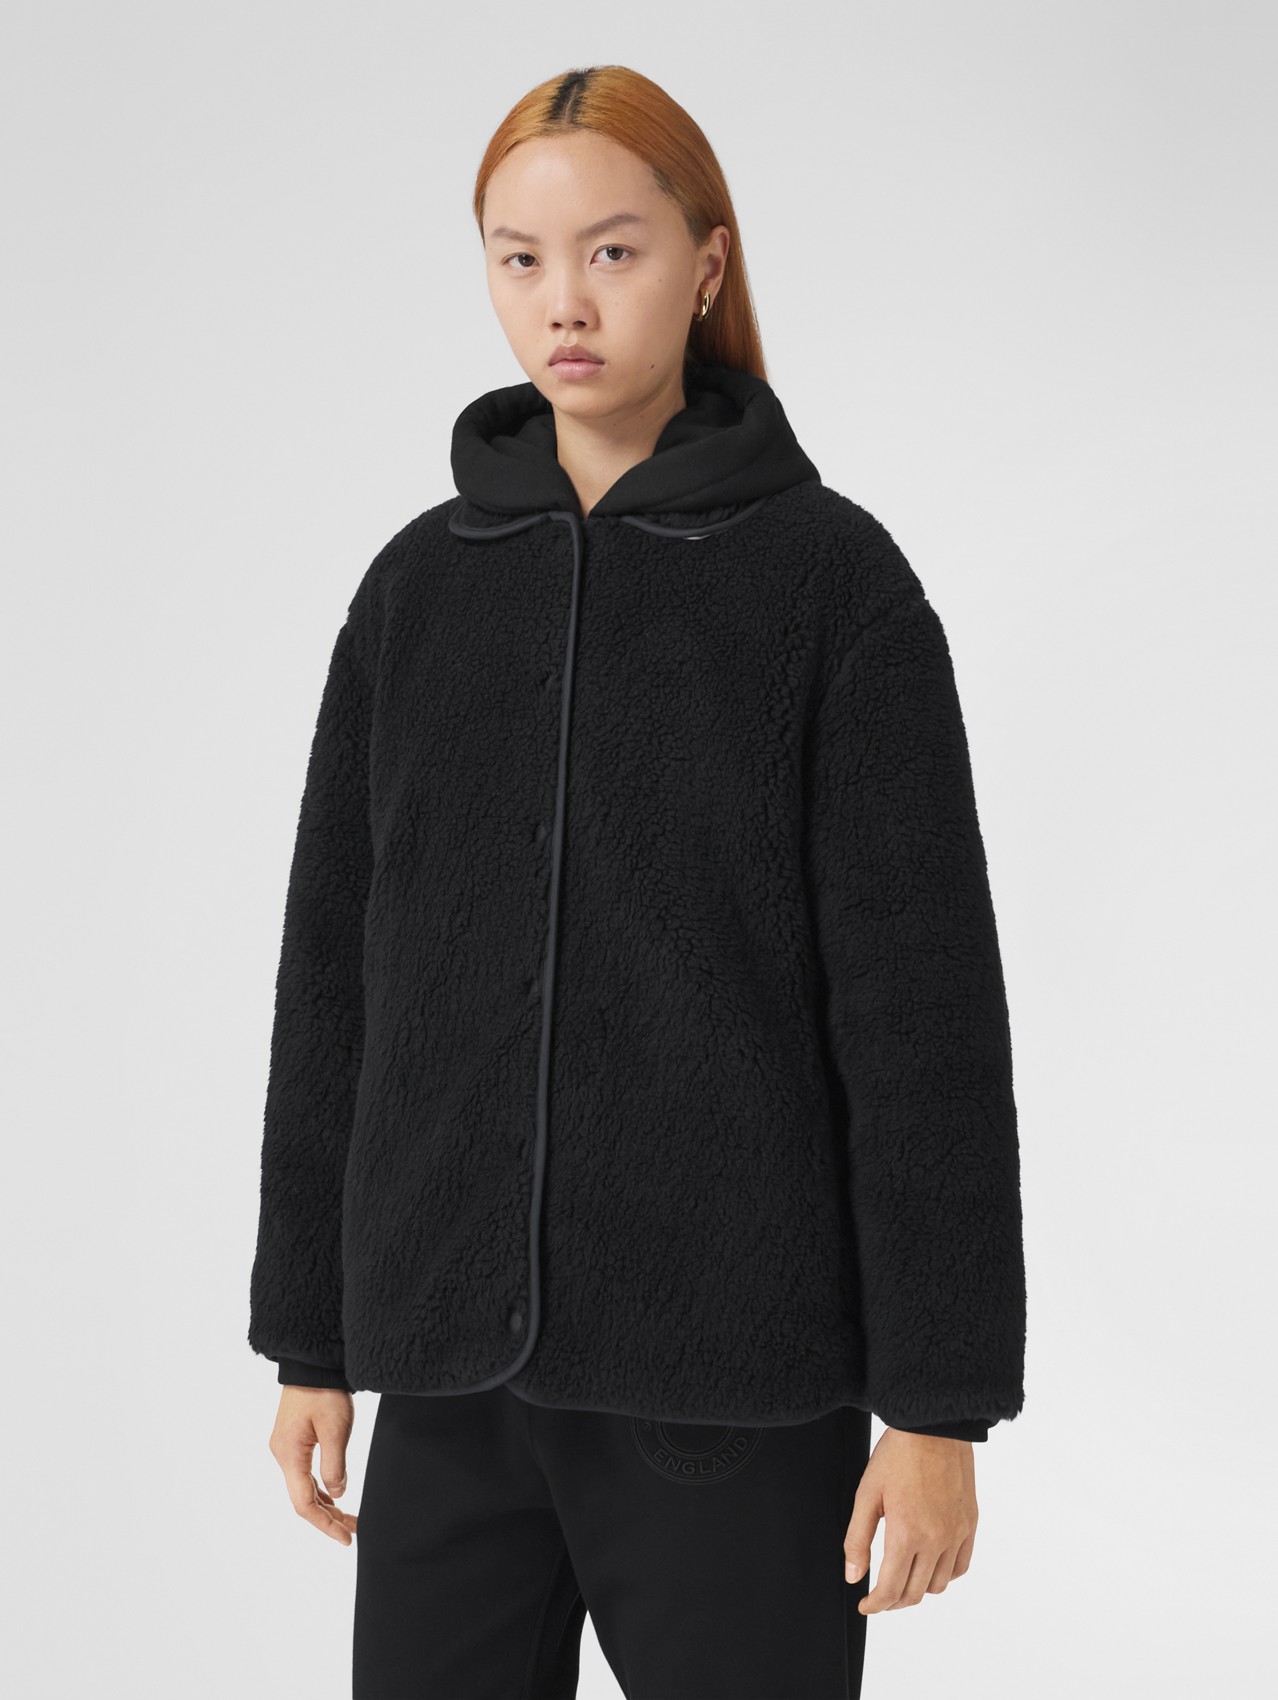 Wool Cashmere Blend Fleece Jacket in Navy Black